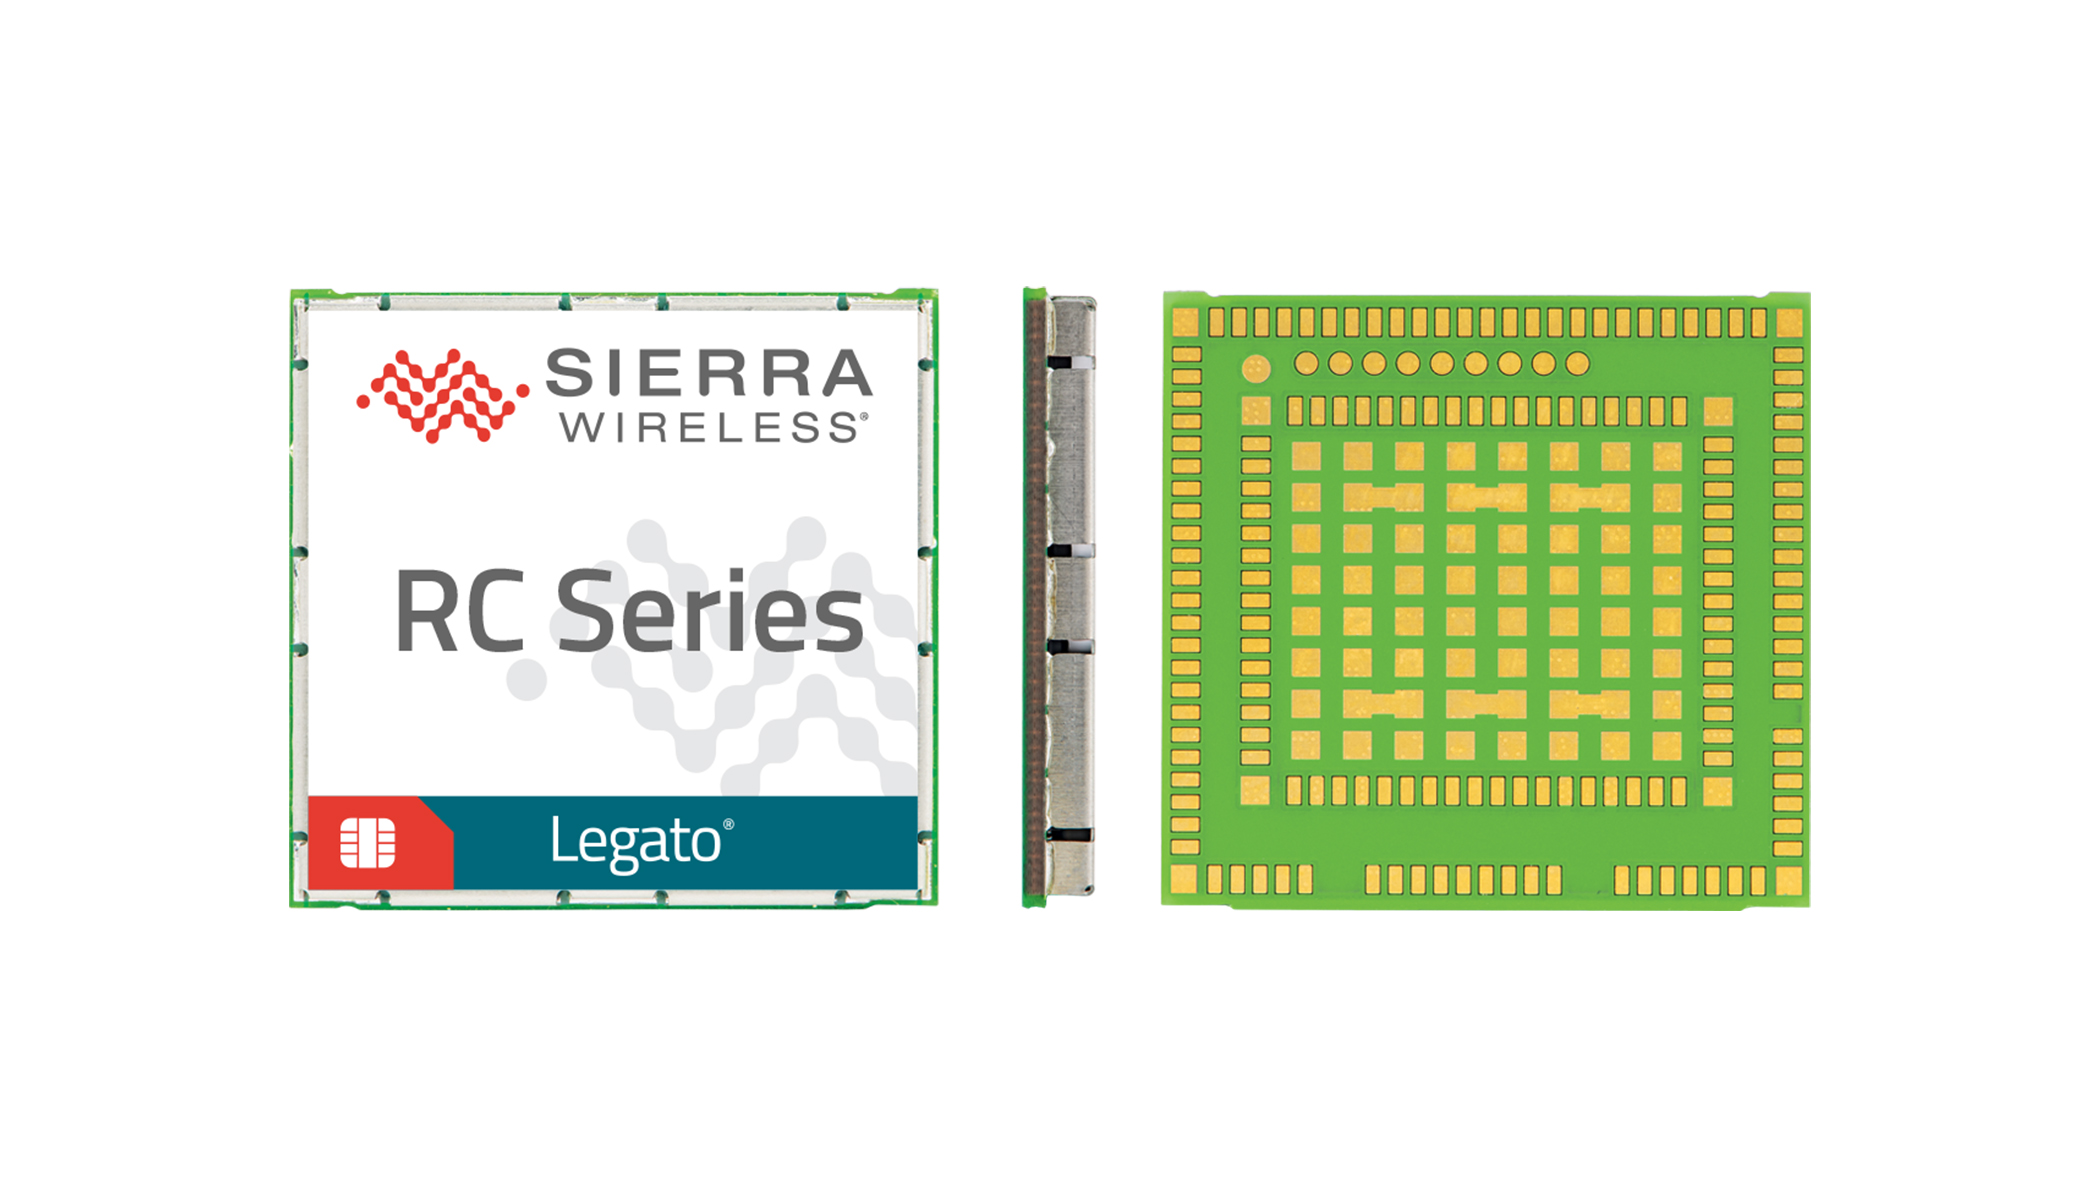 Sierra Wireless AirPrime RC Series